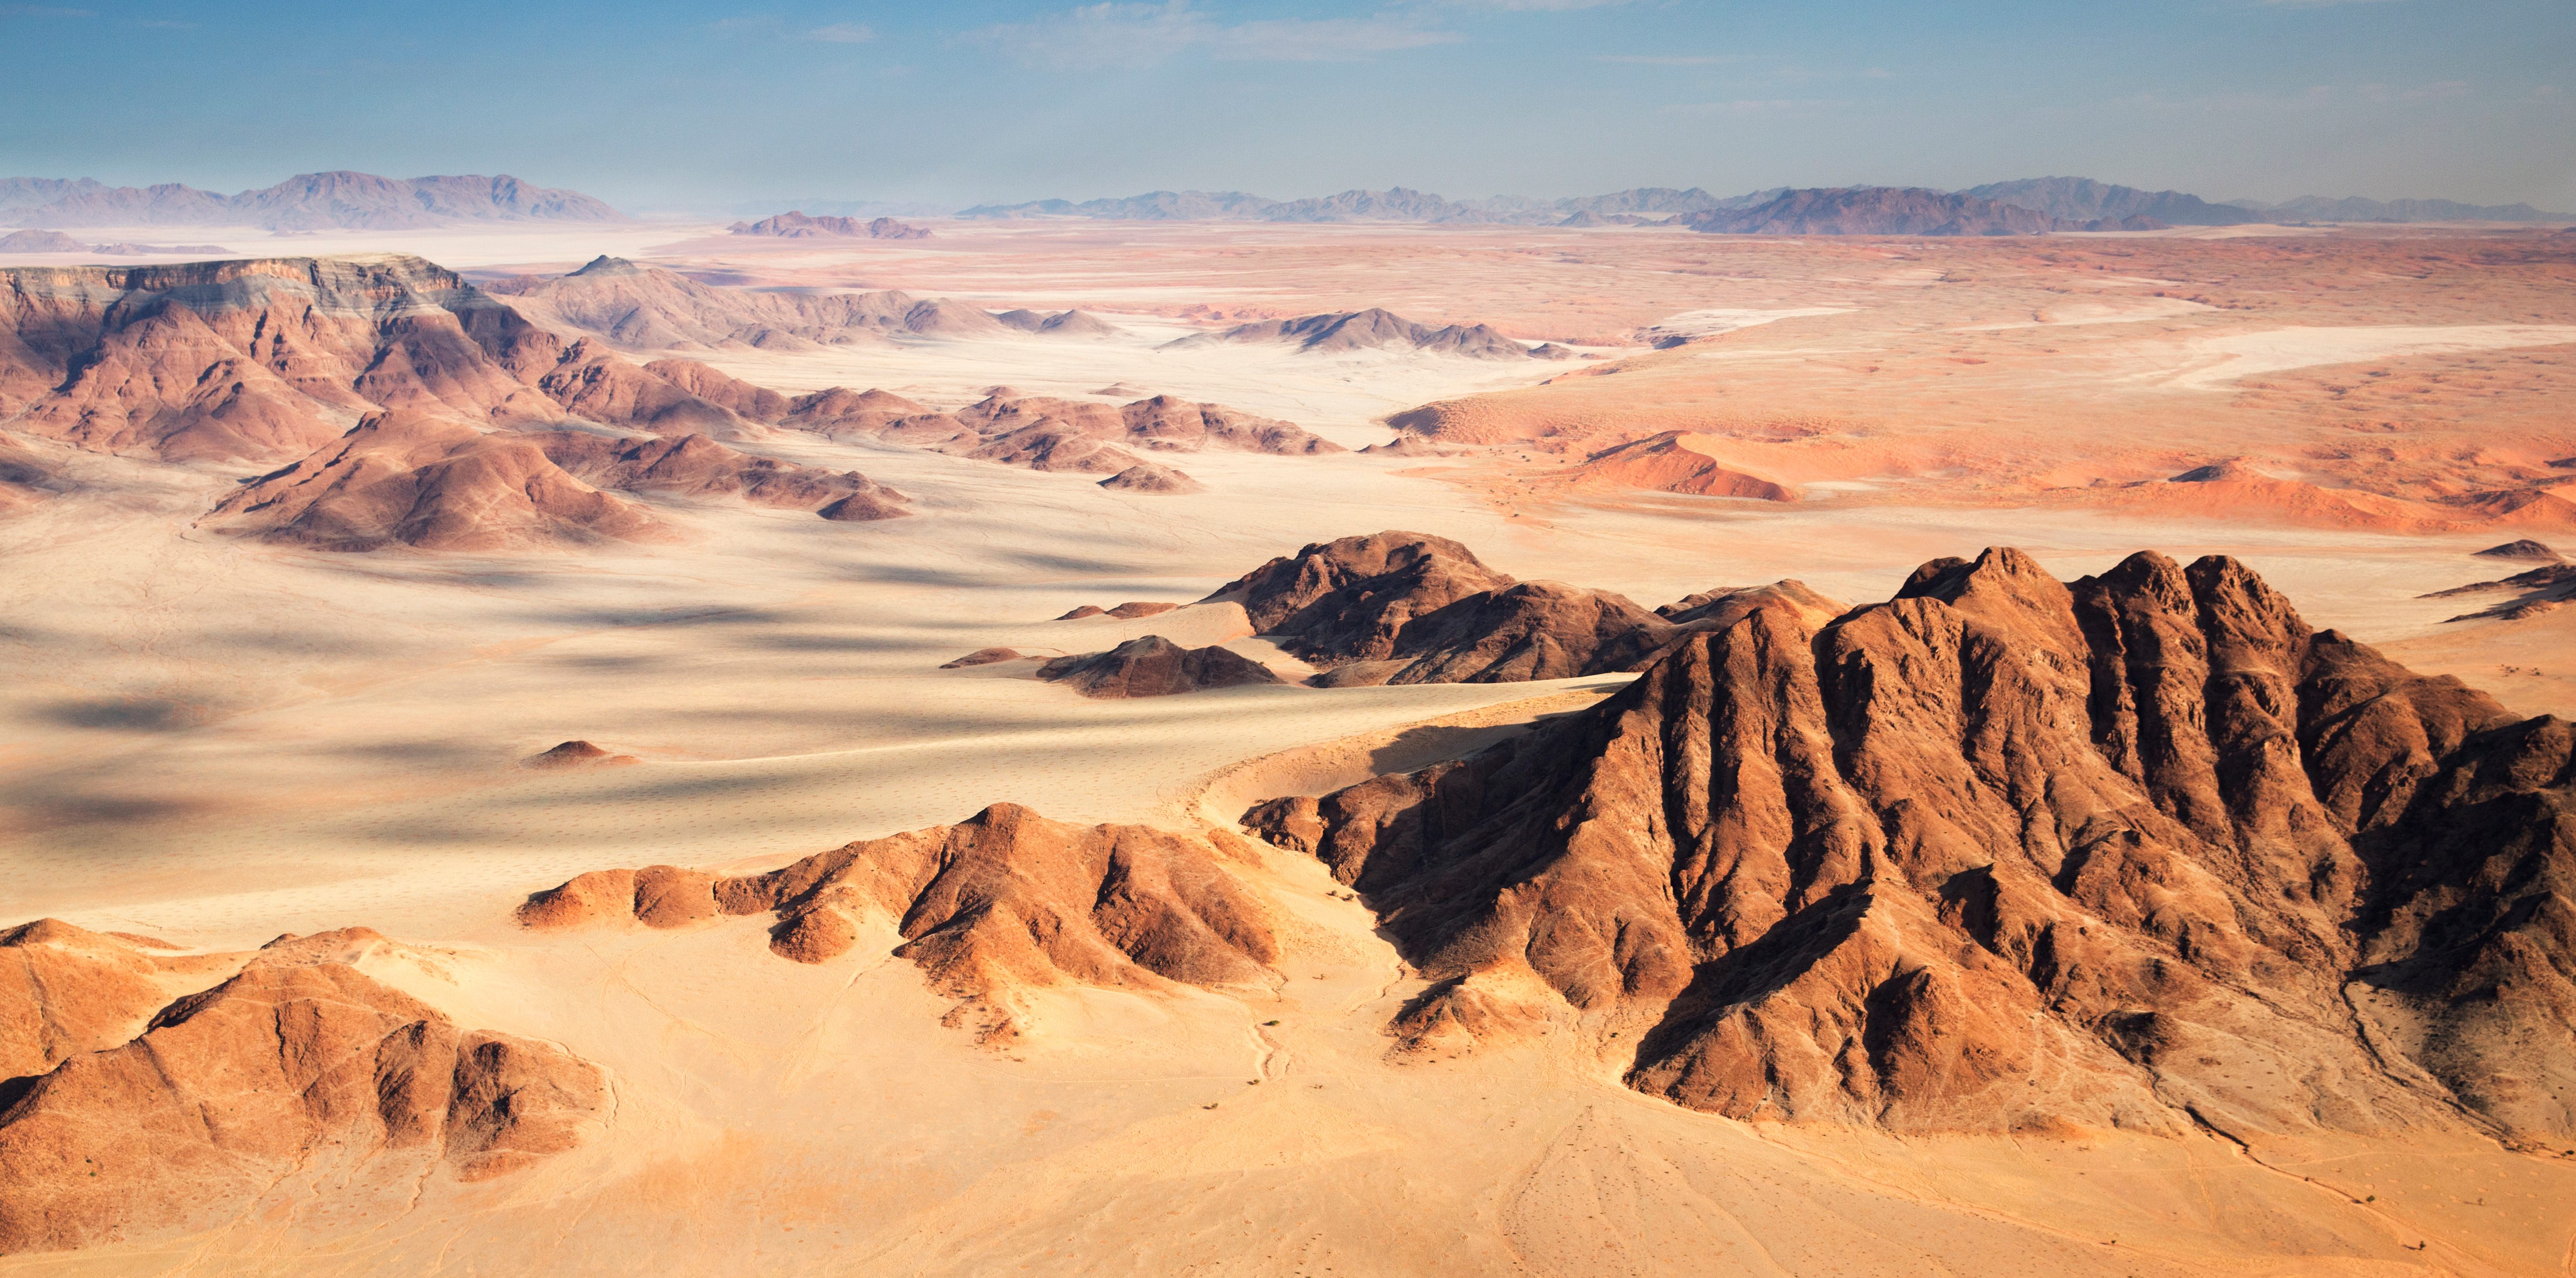 Namib desert